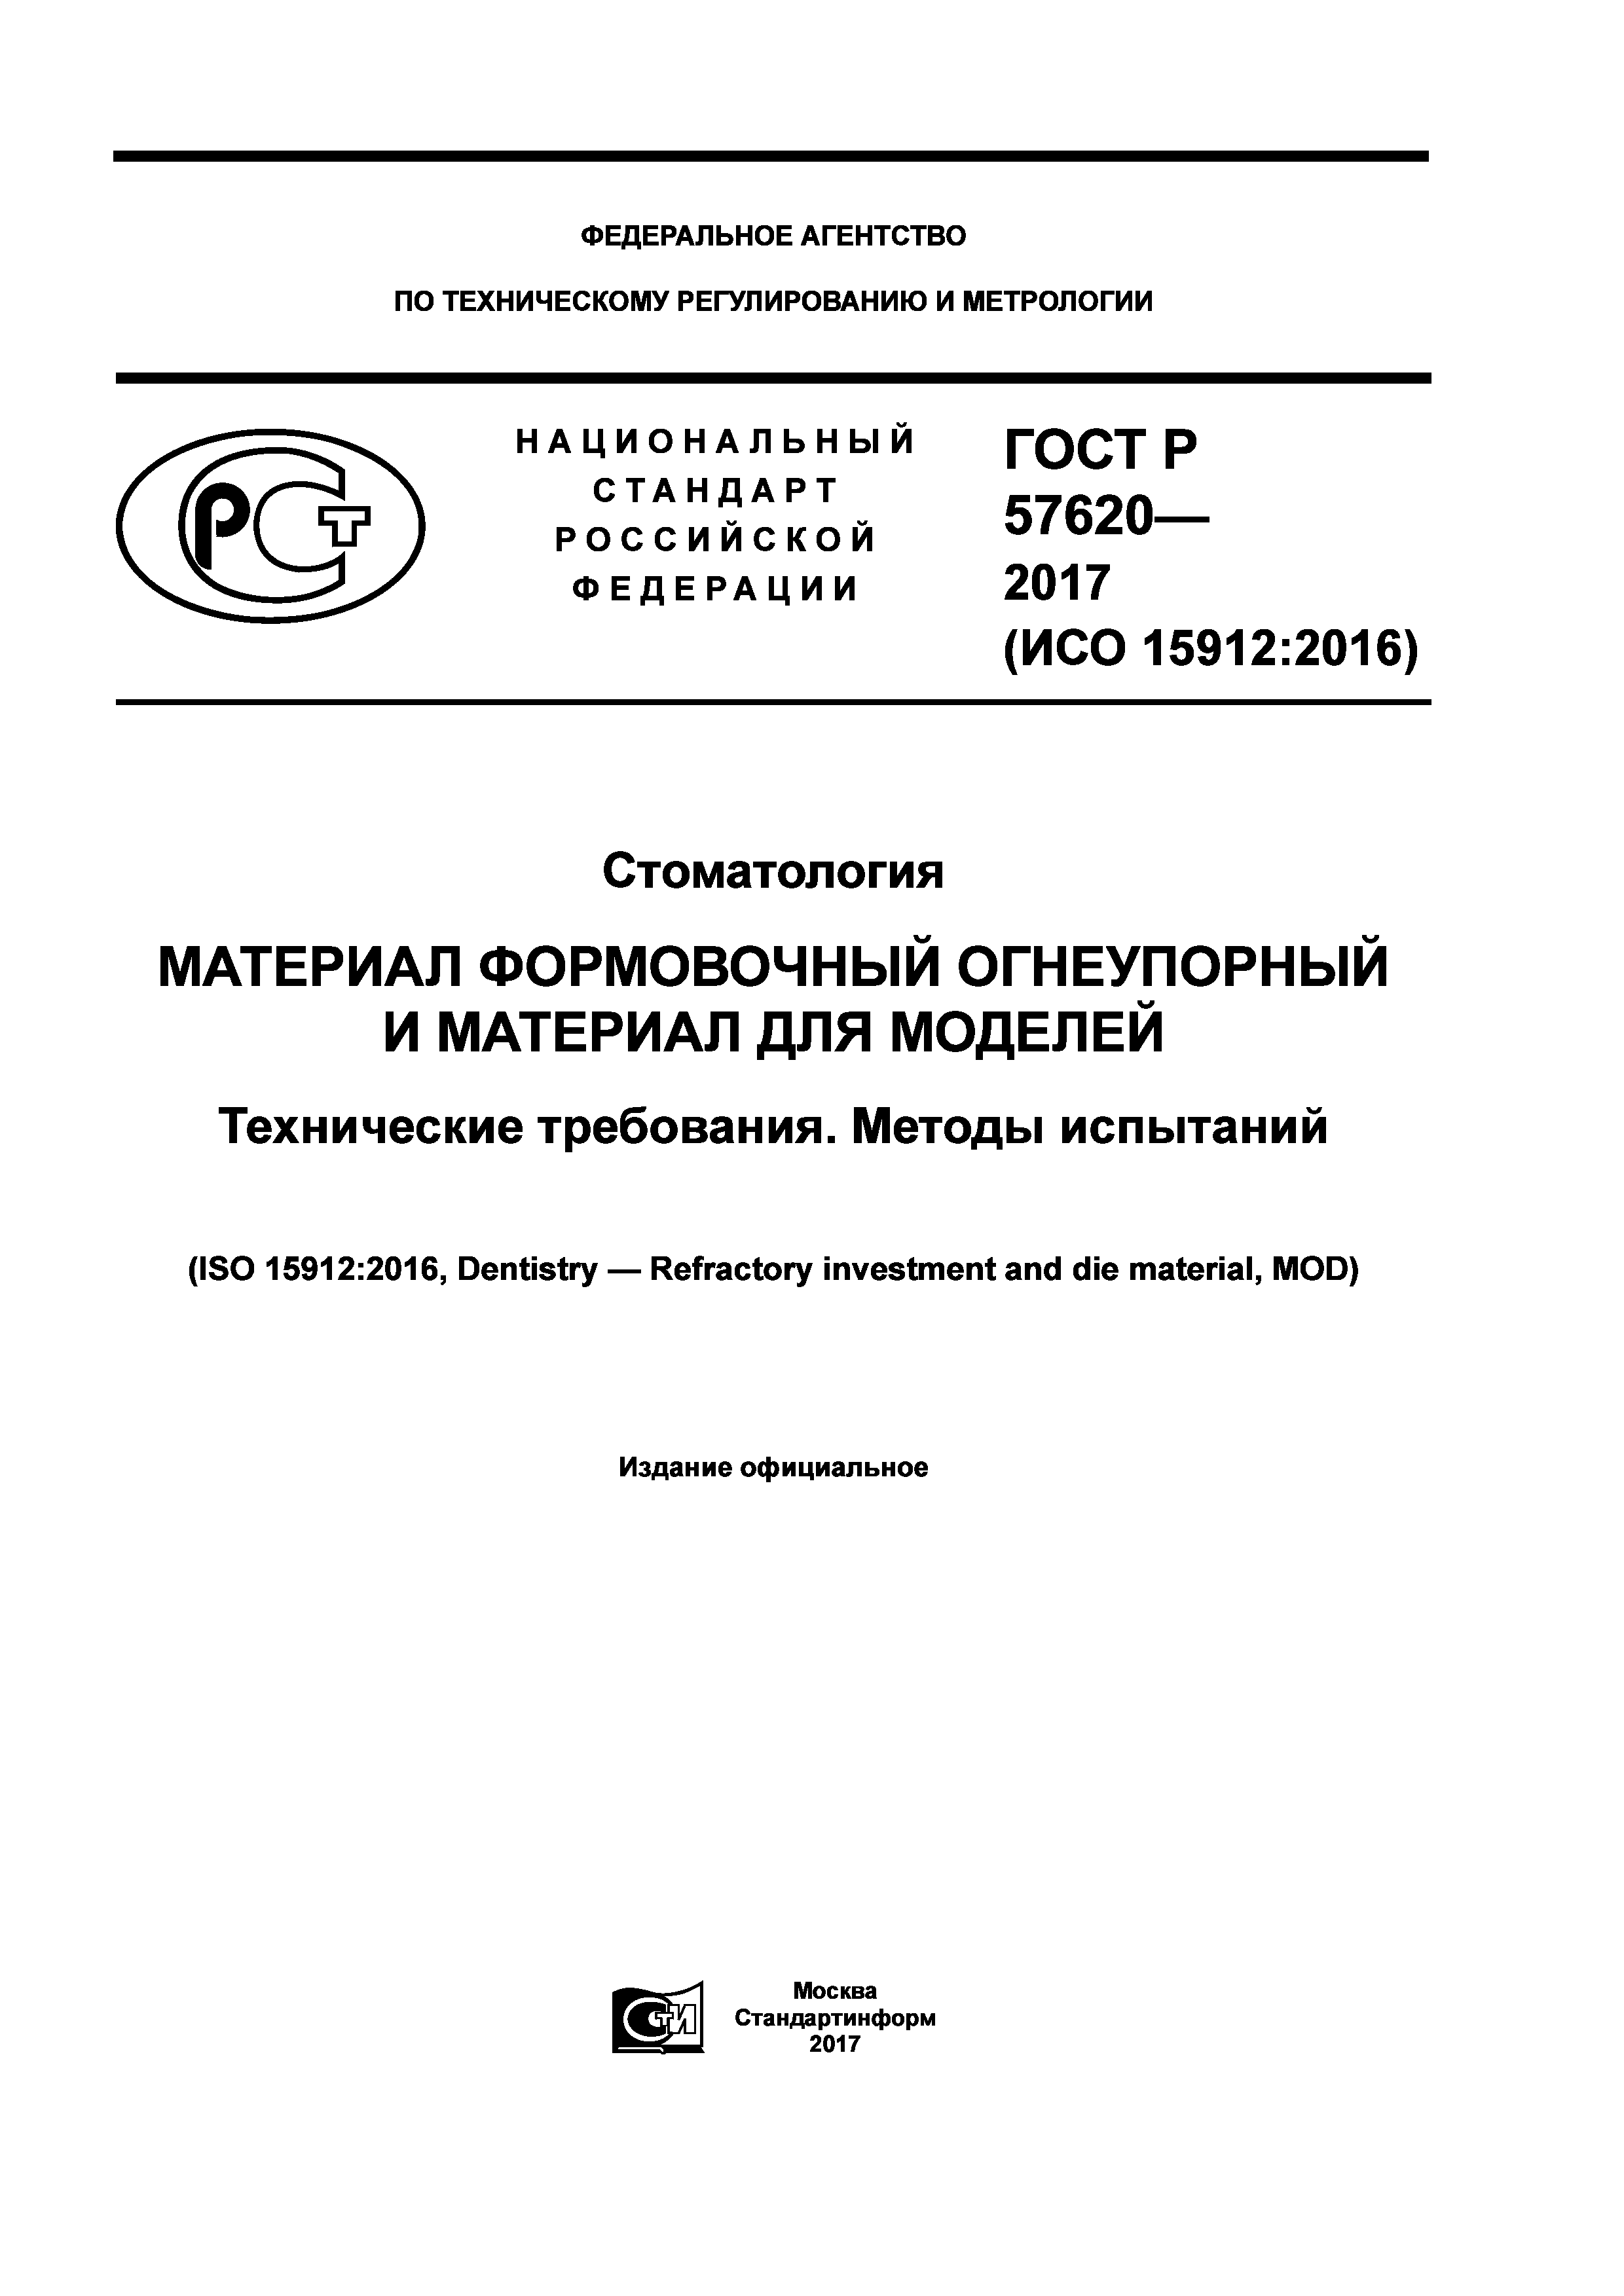 ГОСТ Р 57620-2017